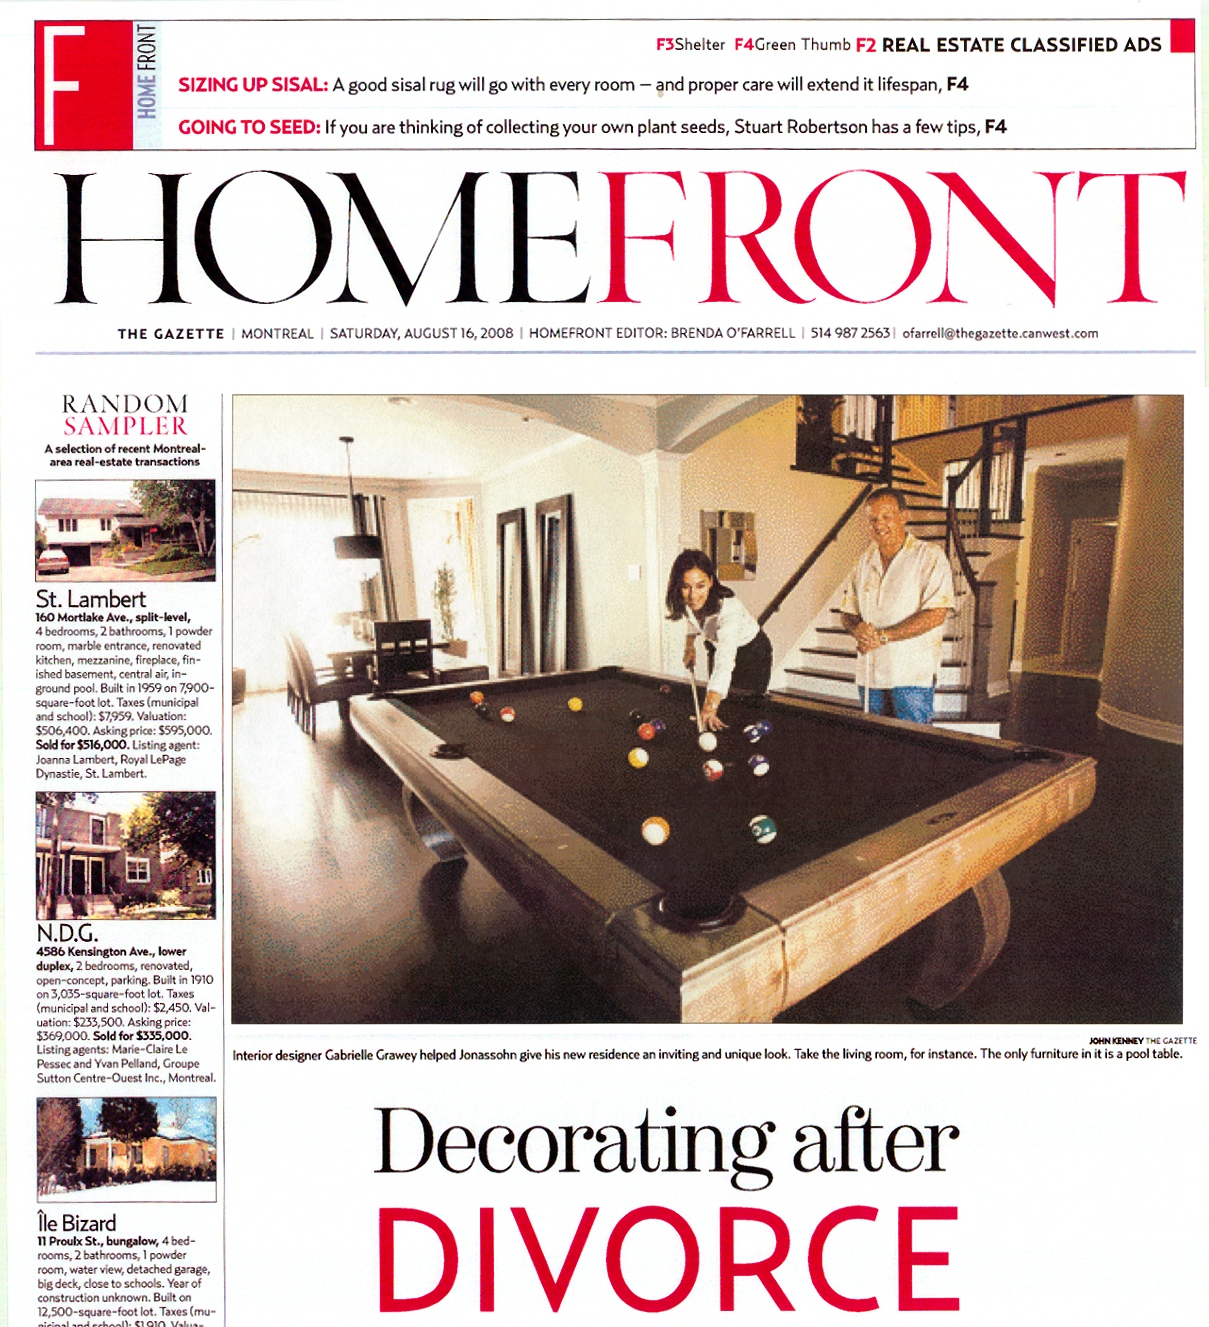 Home Front - The Gazette, Montreal - Decorating after divorce